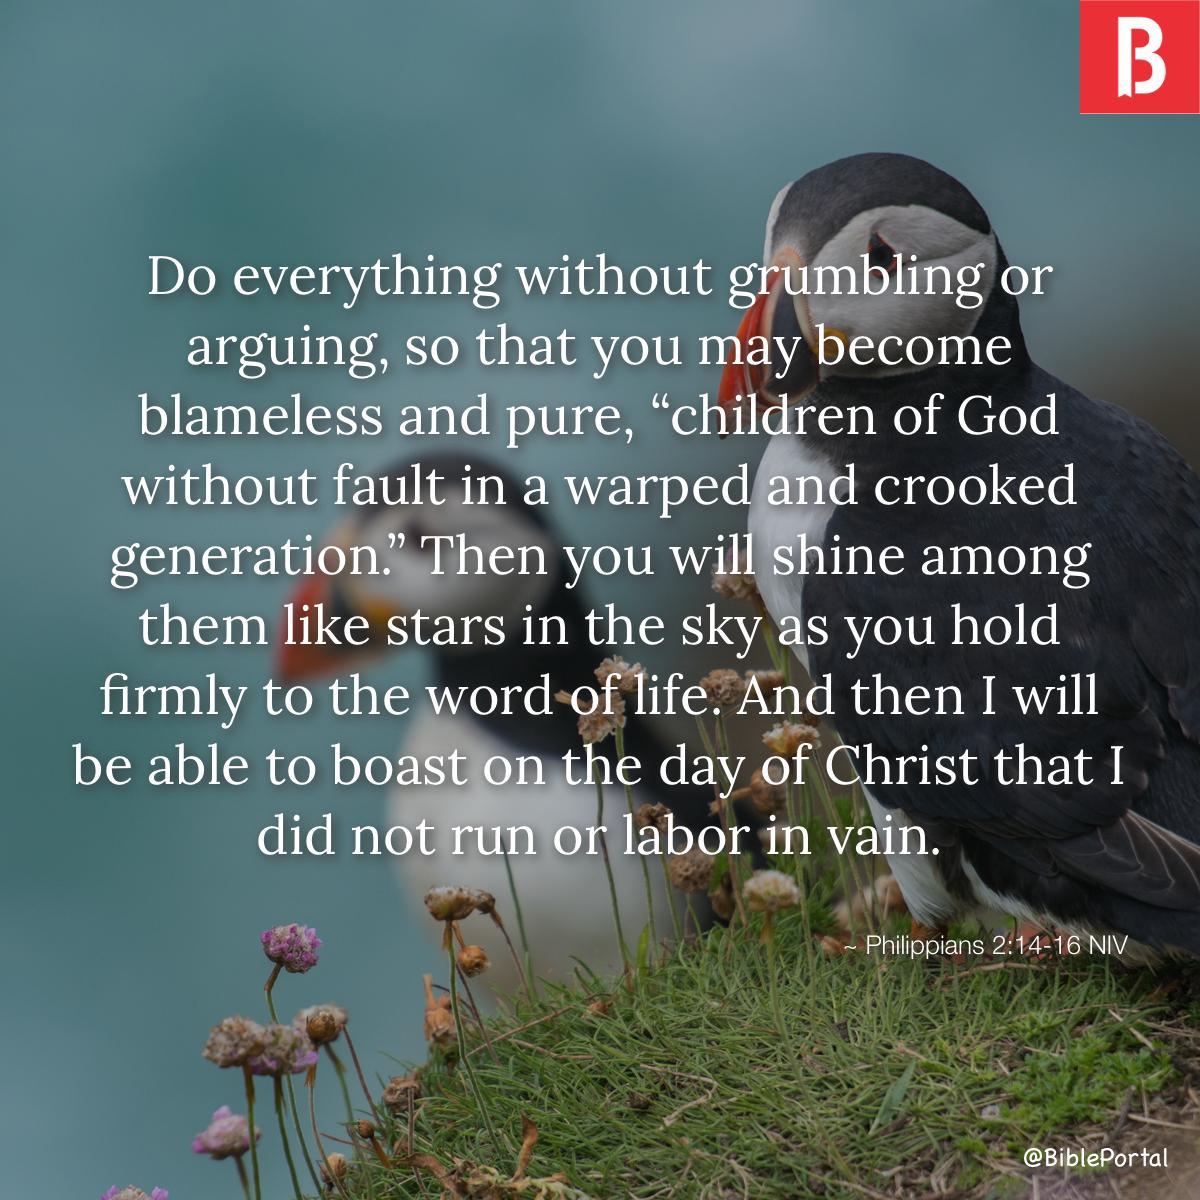 Philippians 2:14-16 NIV